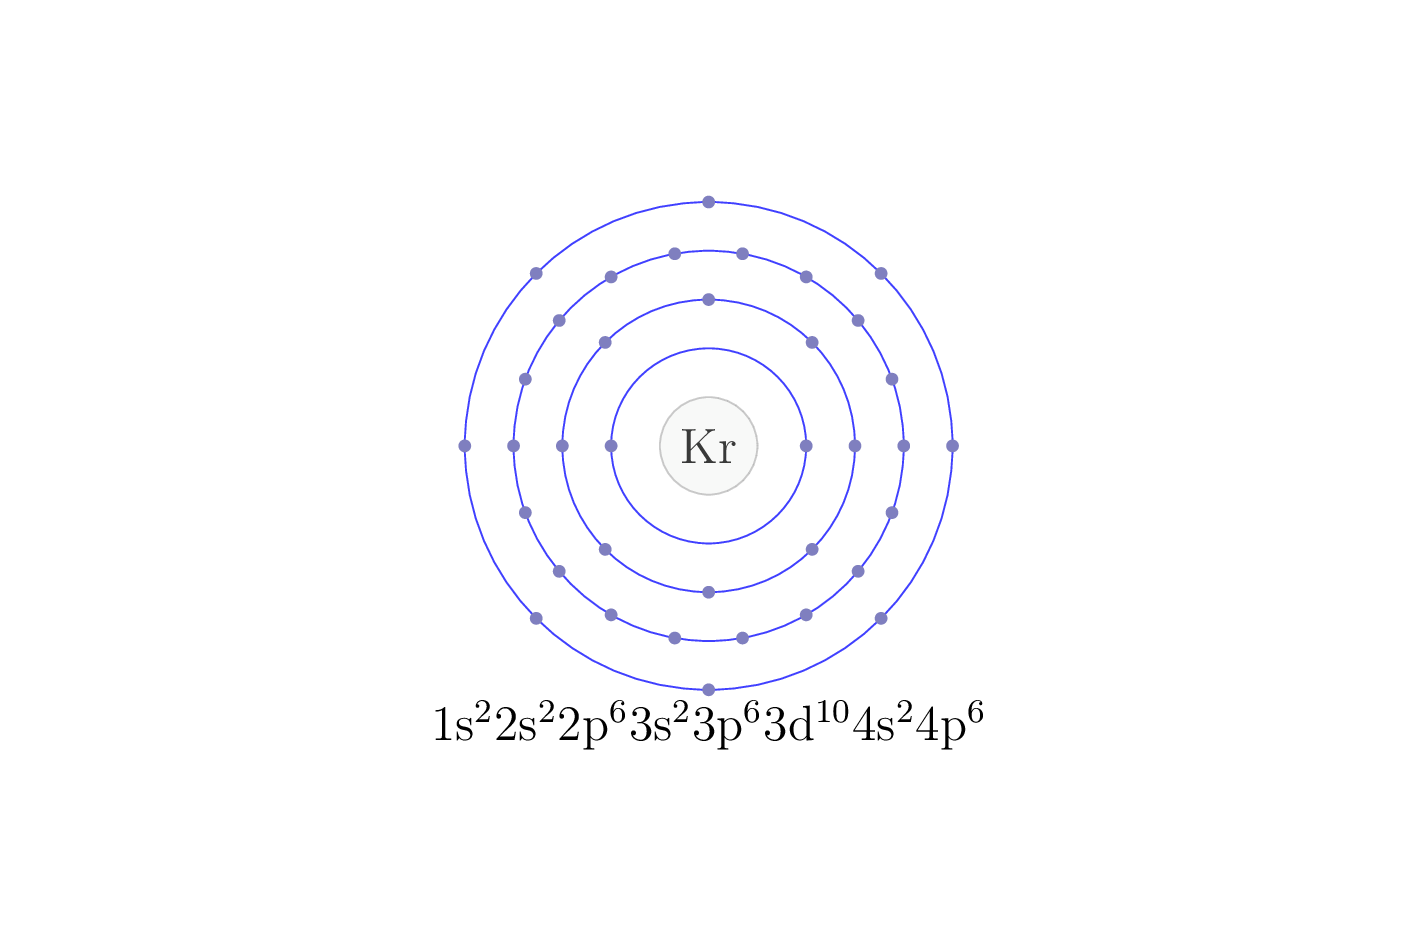 electron configuration of element Kr